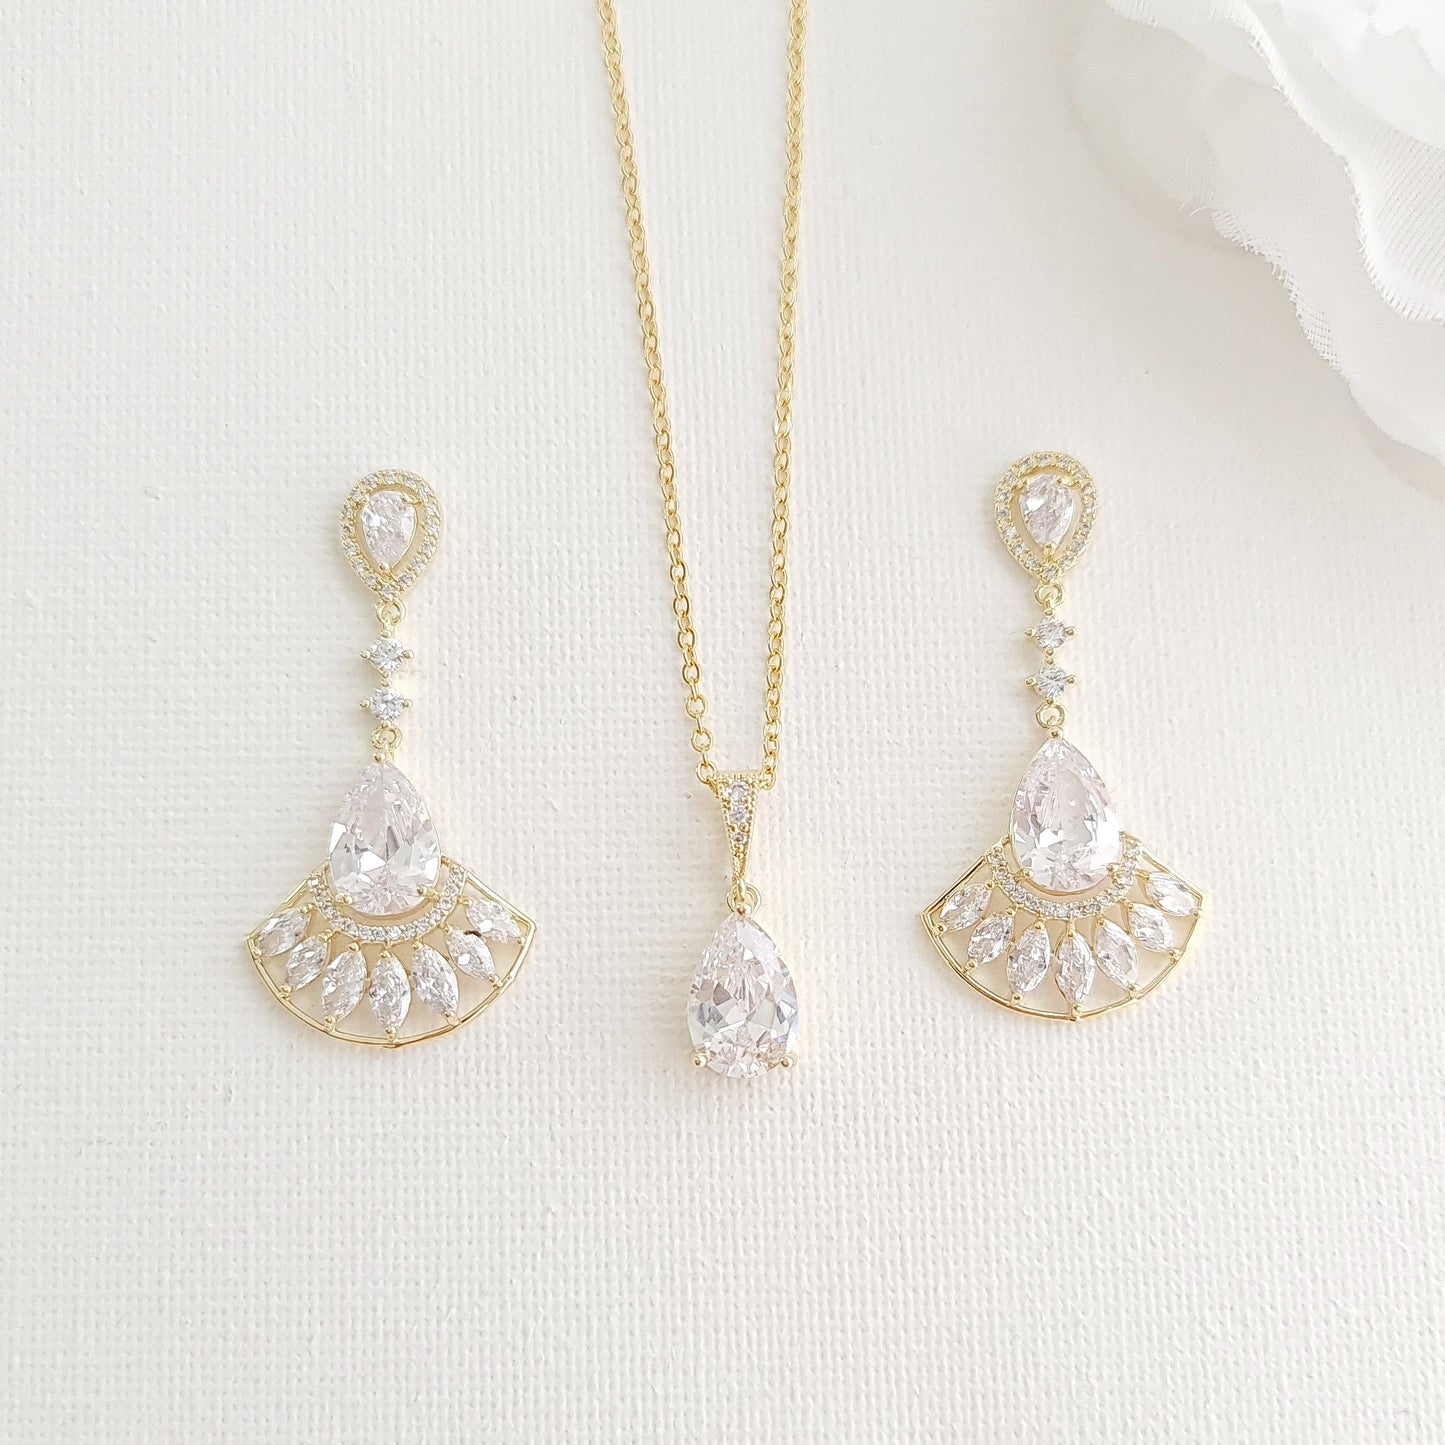 Jewellery Set in Rose Gold-Ilana